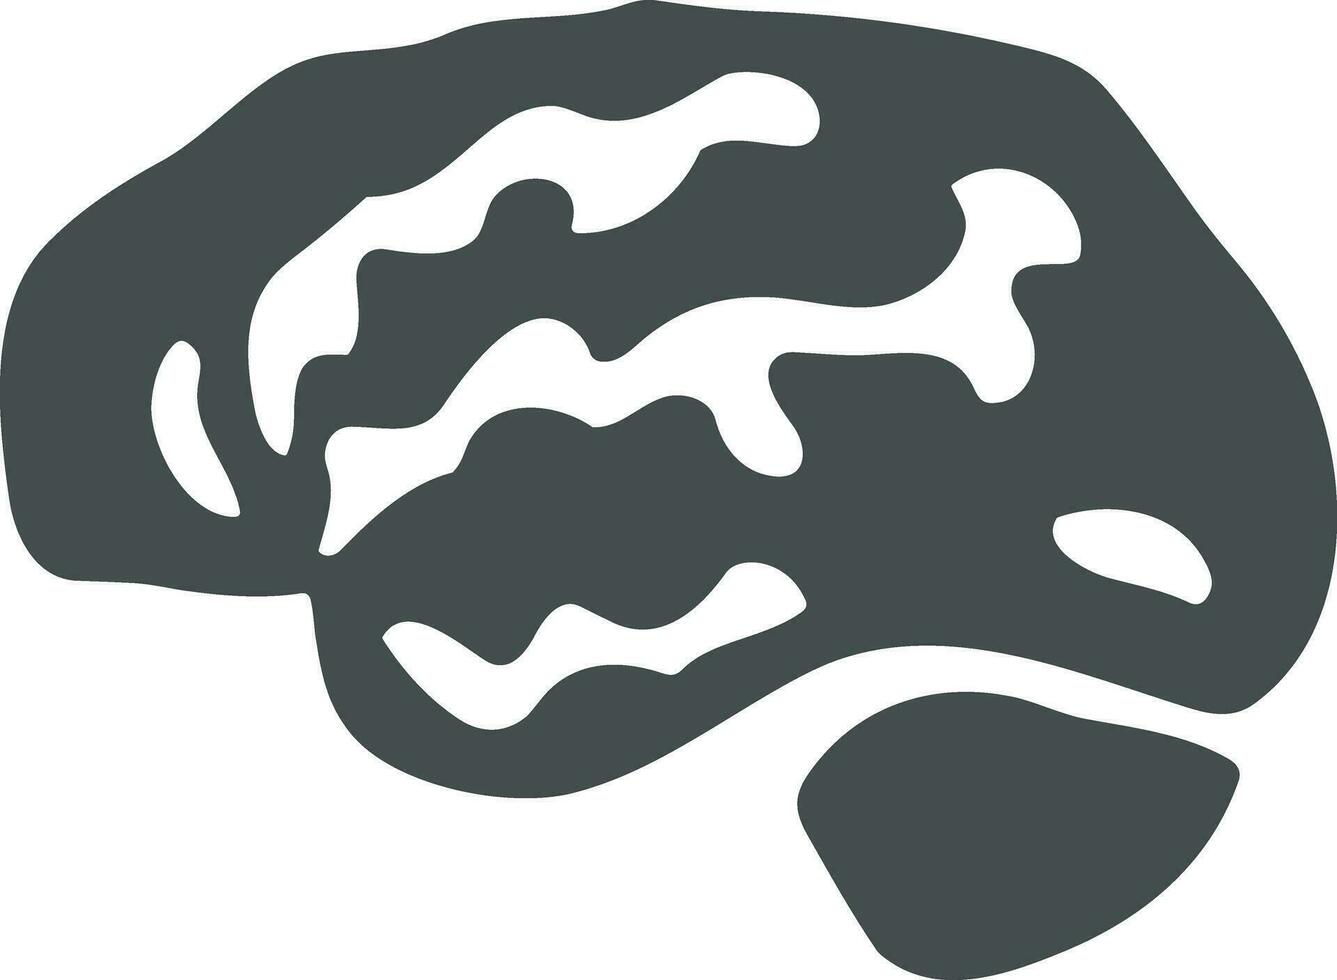 Brain idea symbol icon vector image. Illustration of the creative intelligence think design image